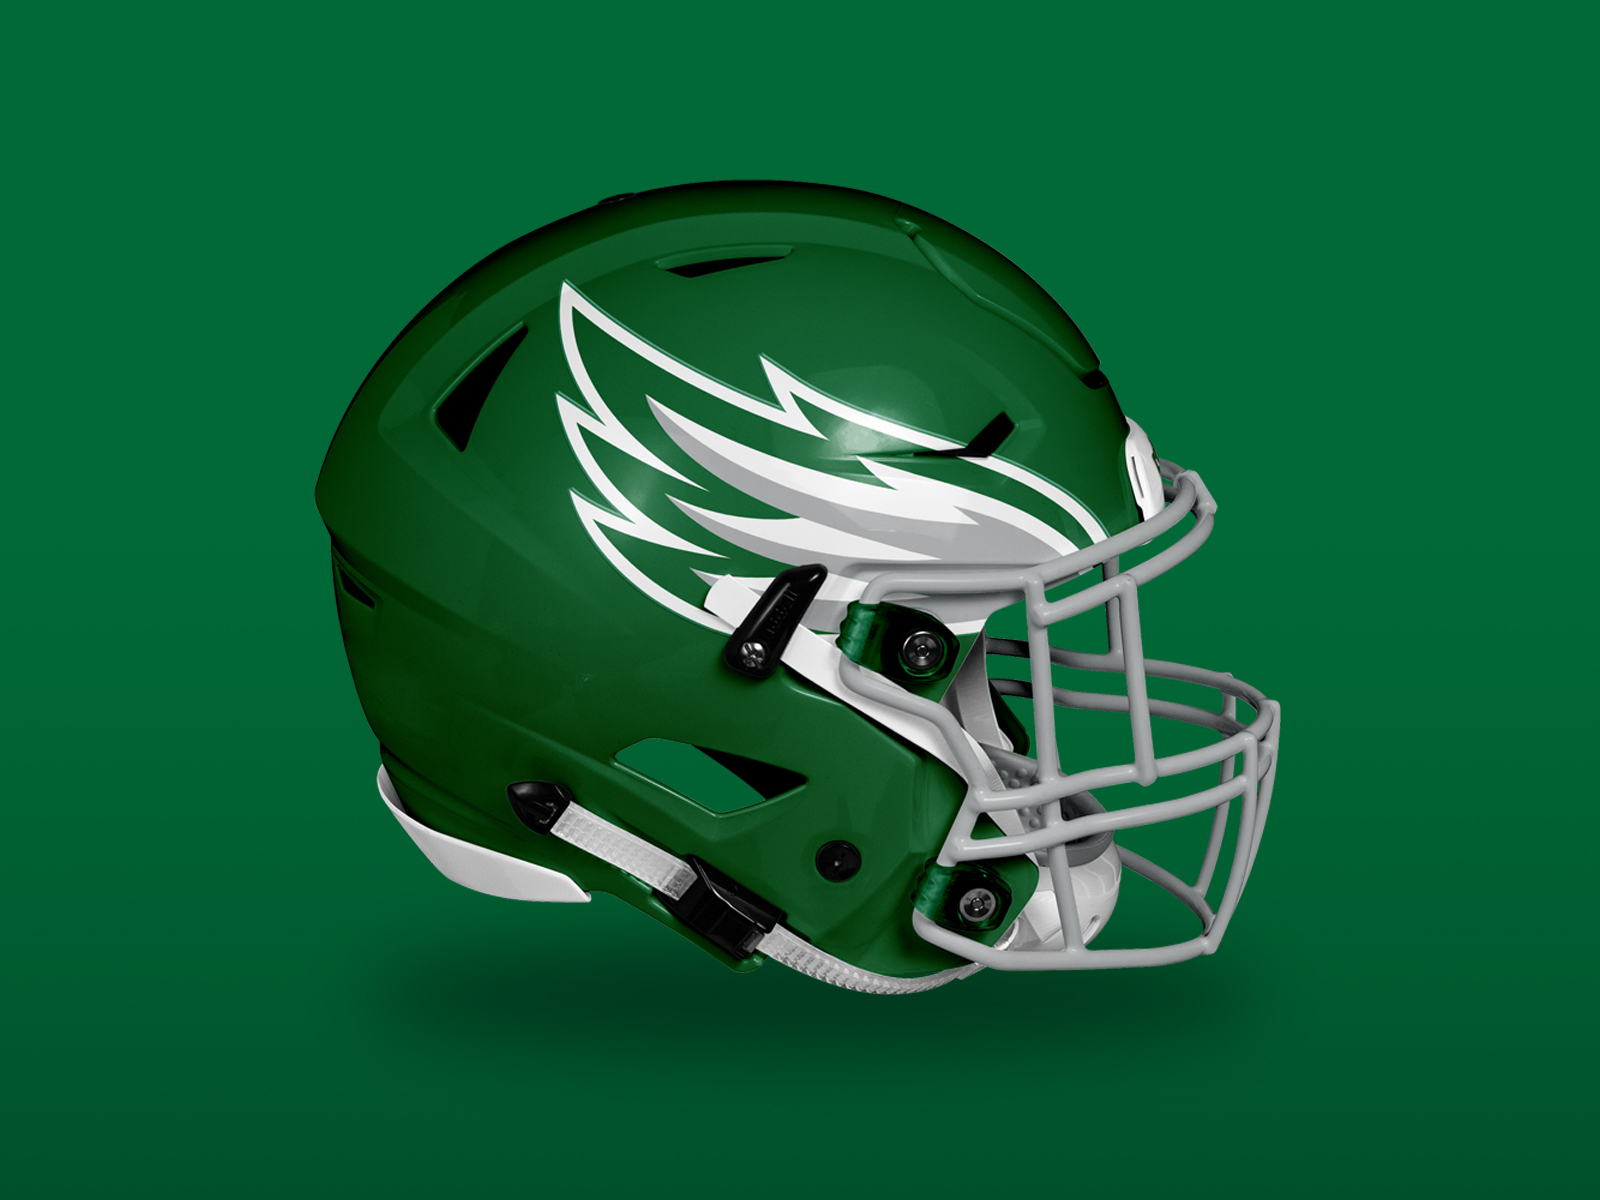 Eagles Throwback Concept (Helmet & Uniform) by Dan Blessing